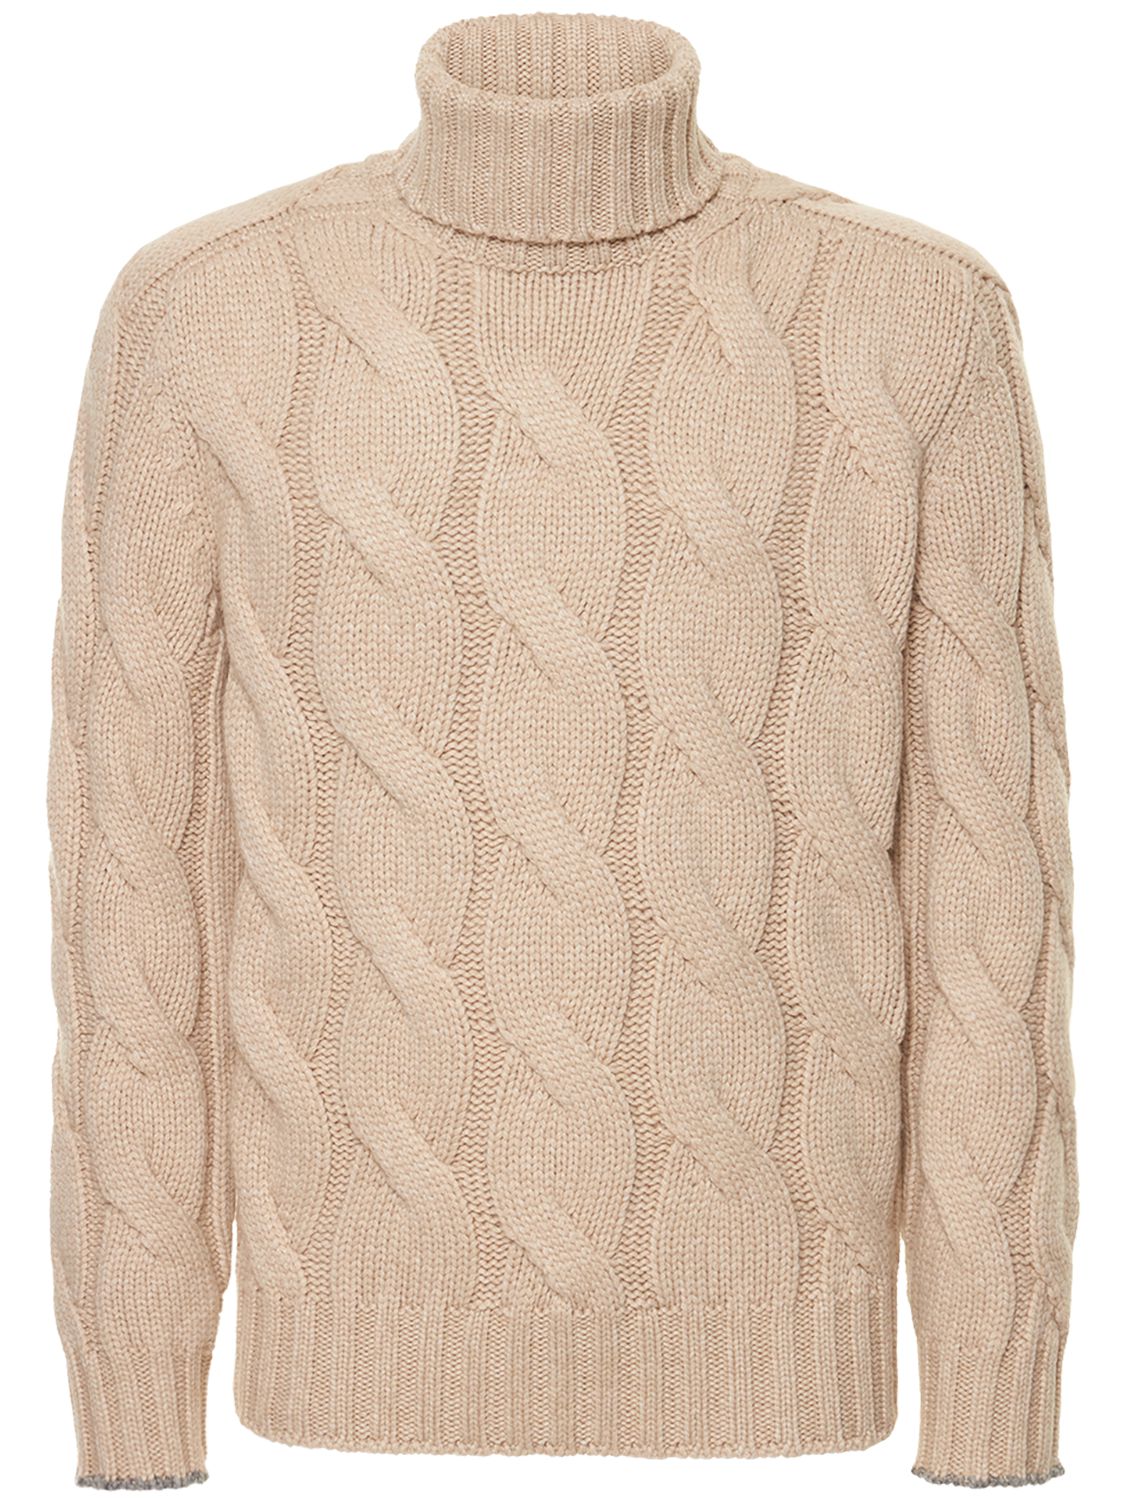 Cashmere Knit Turtleneck Sweater Luisaviaroma Women Clothing Sweaters Turtlenecks 